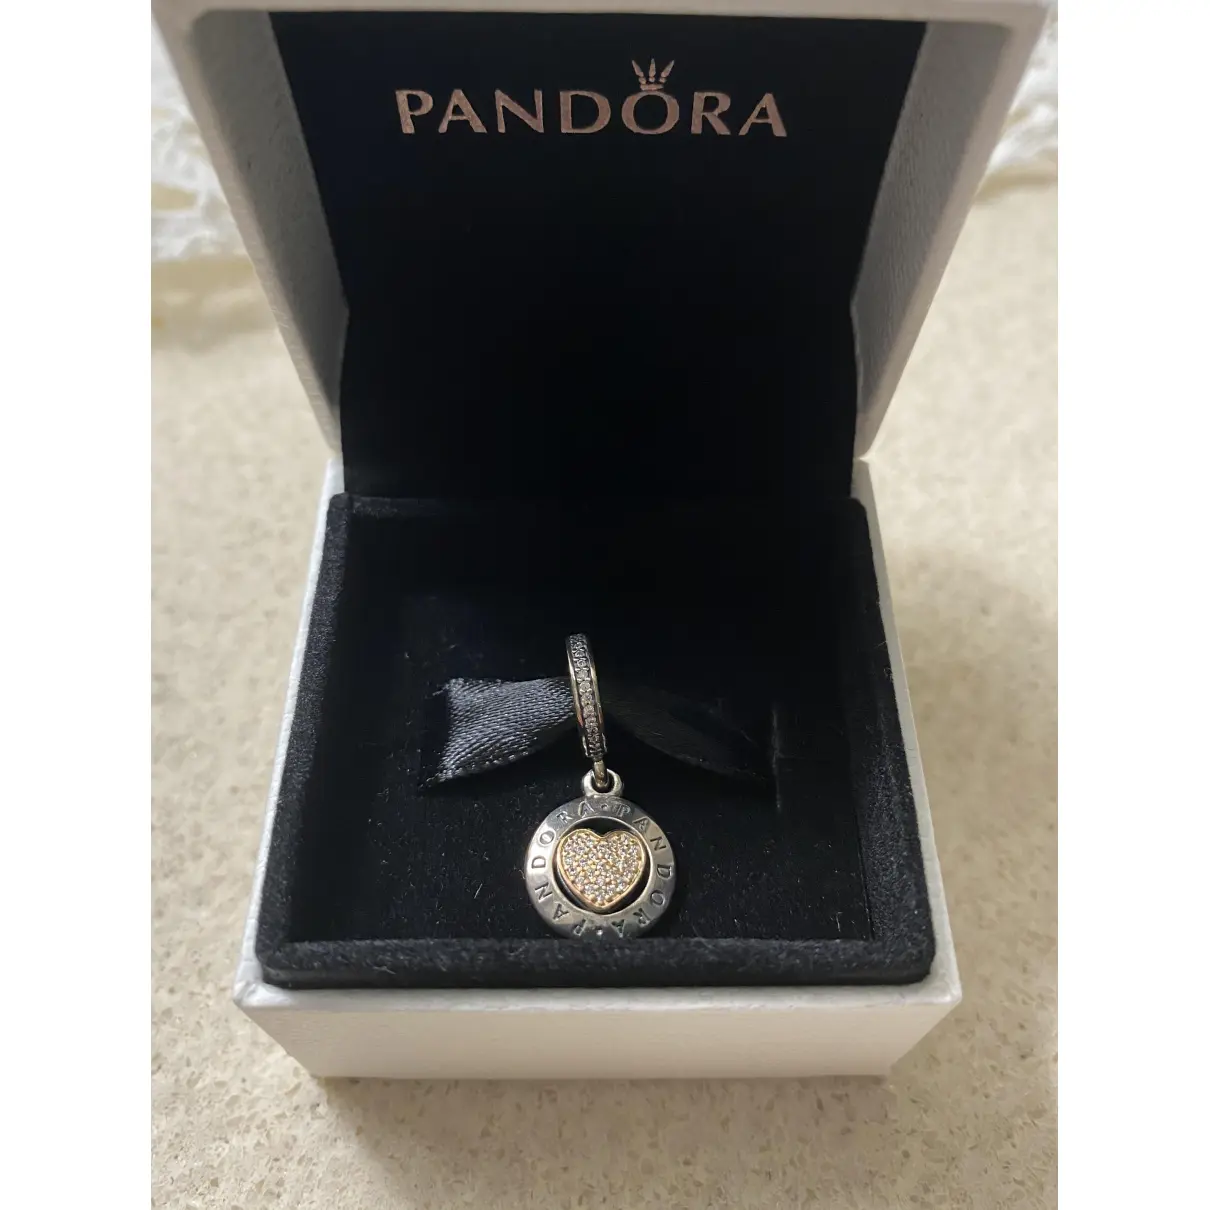 Buy Pandora Silver pendant online